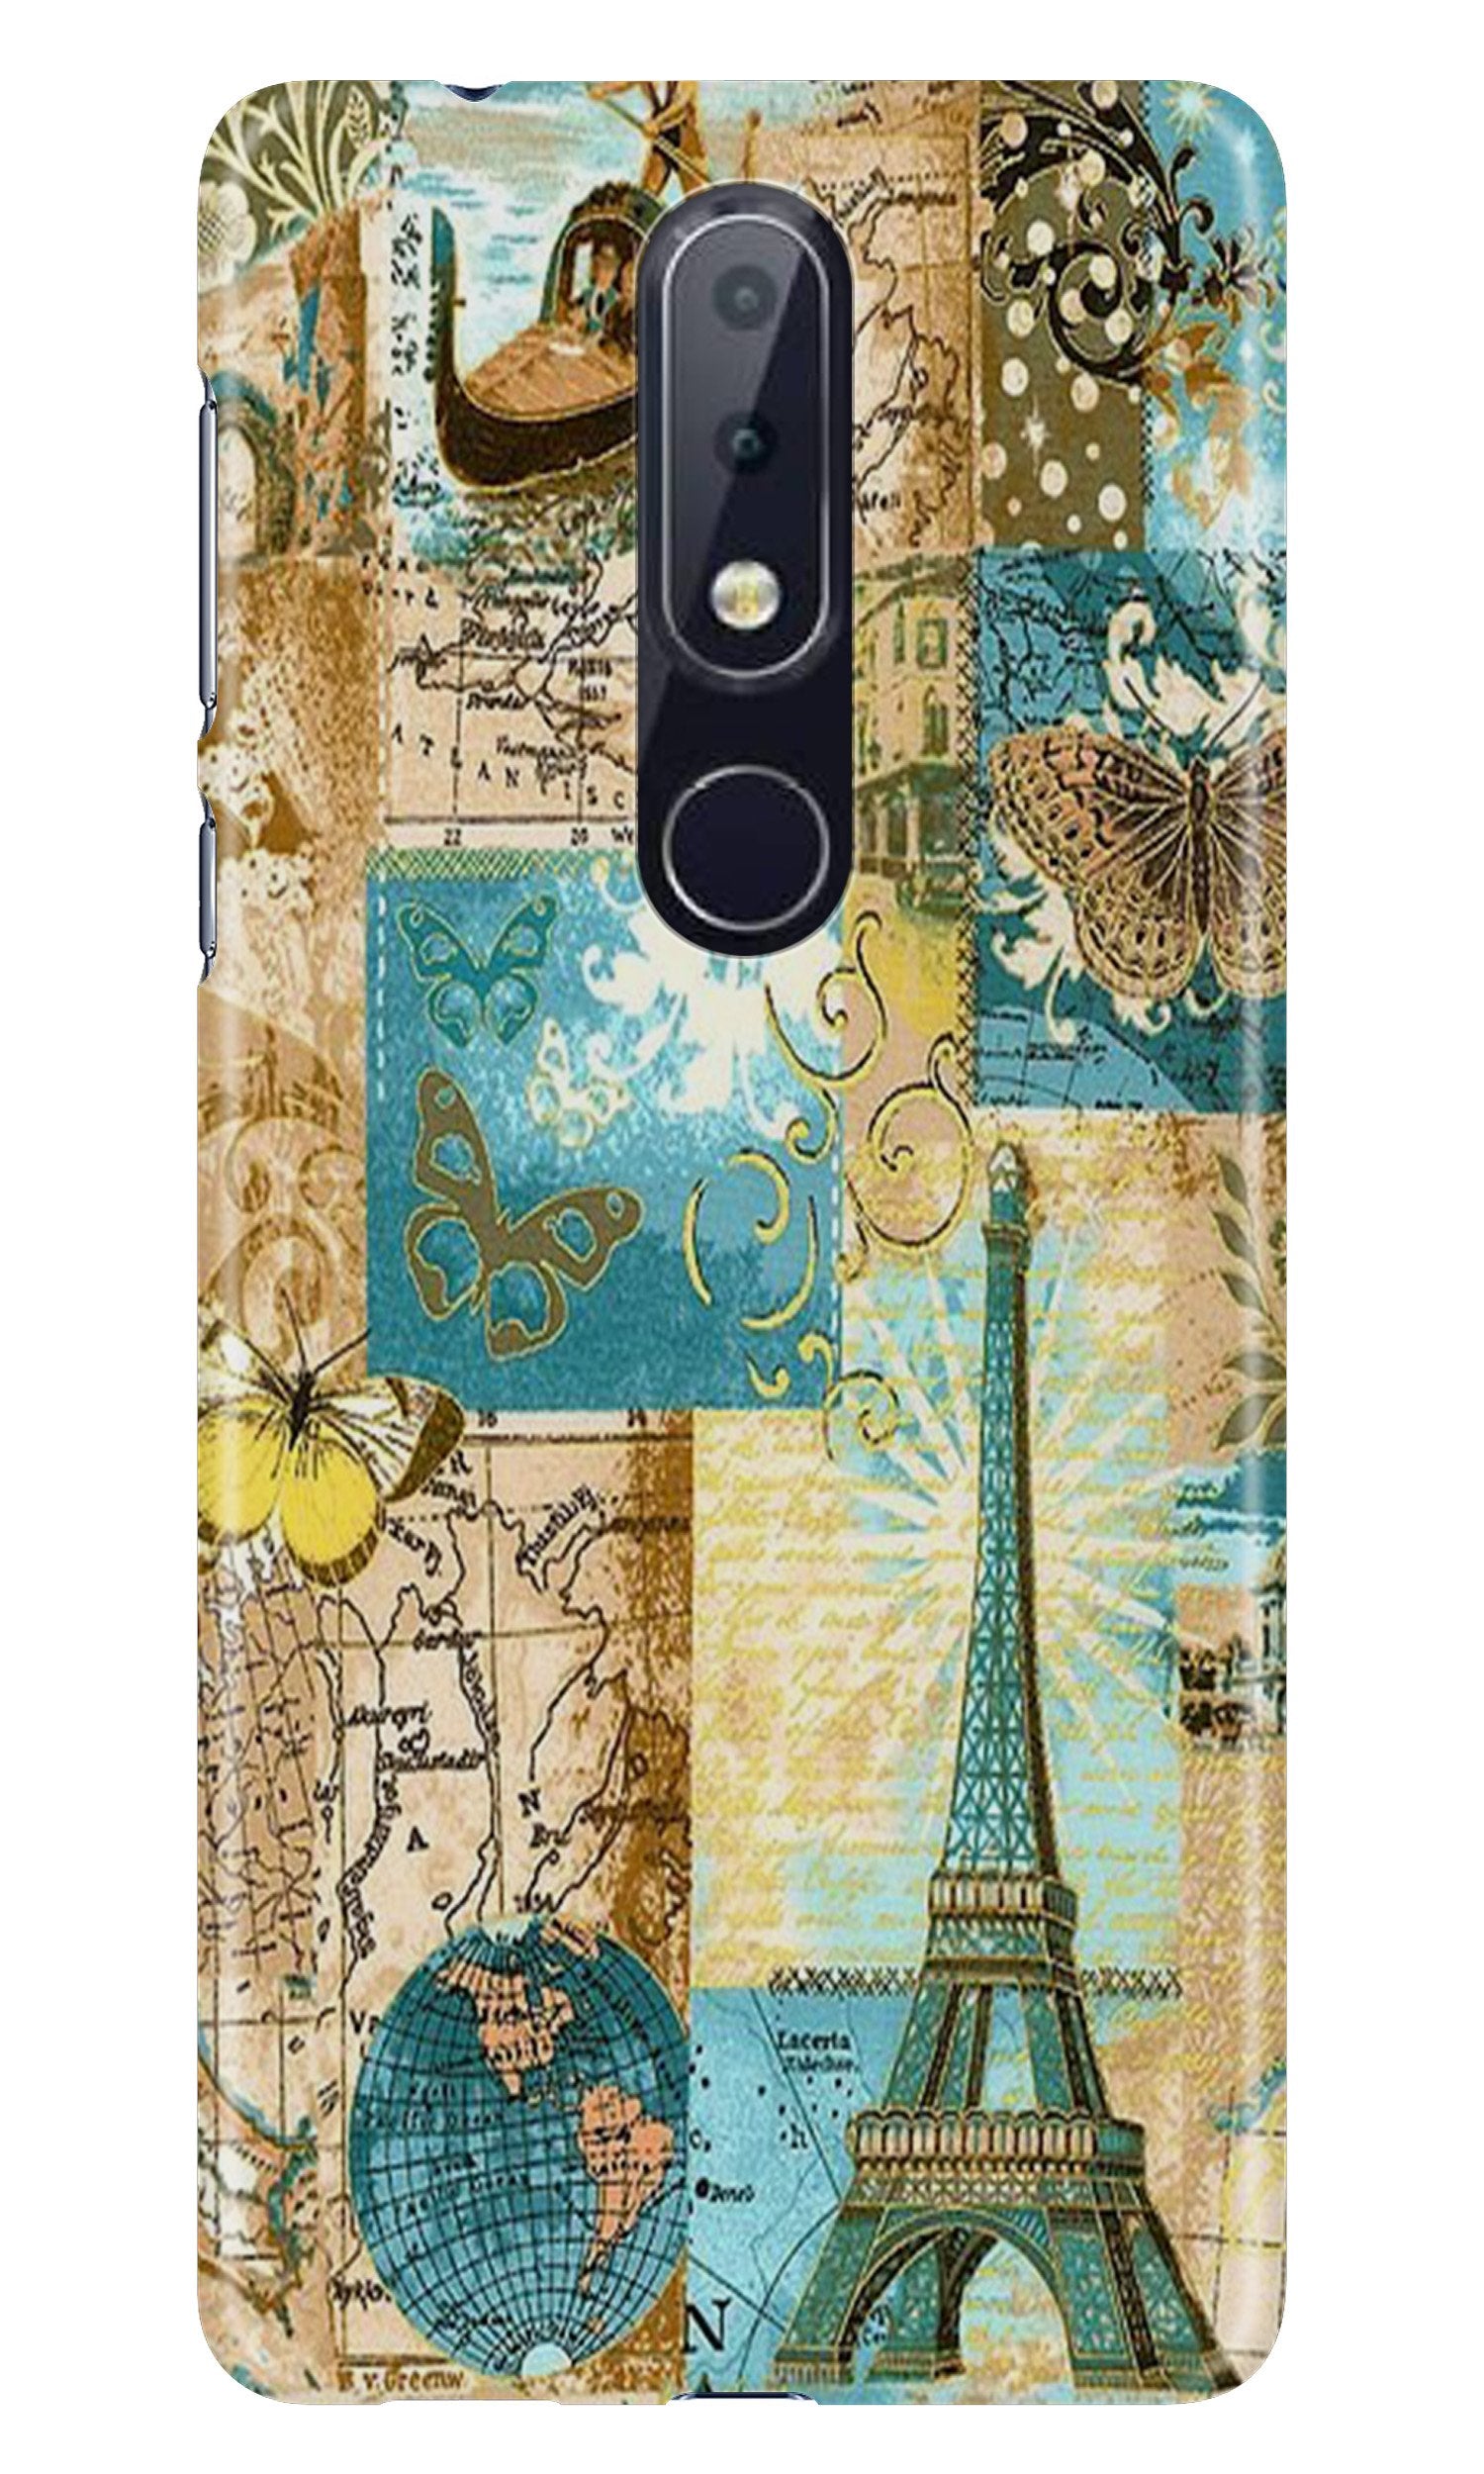 Travel Eiffel Tower  Case for Nokia 6.1 Plus (Design No. 206)